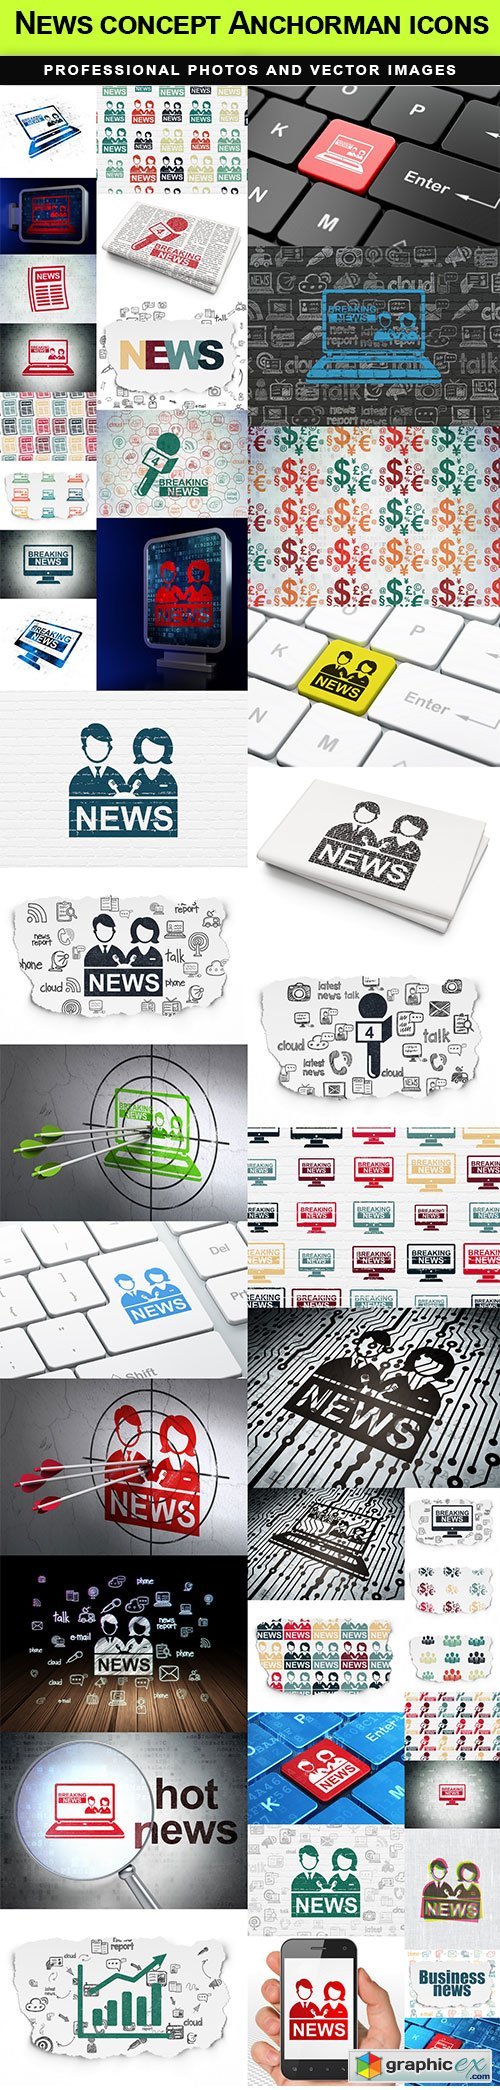 News concept Anchorman icons